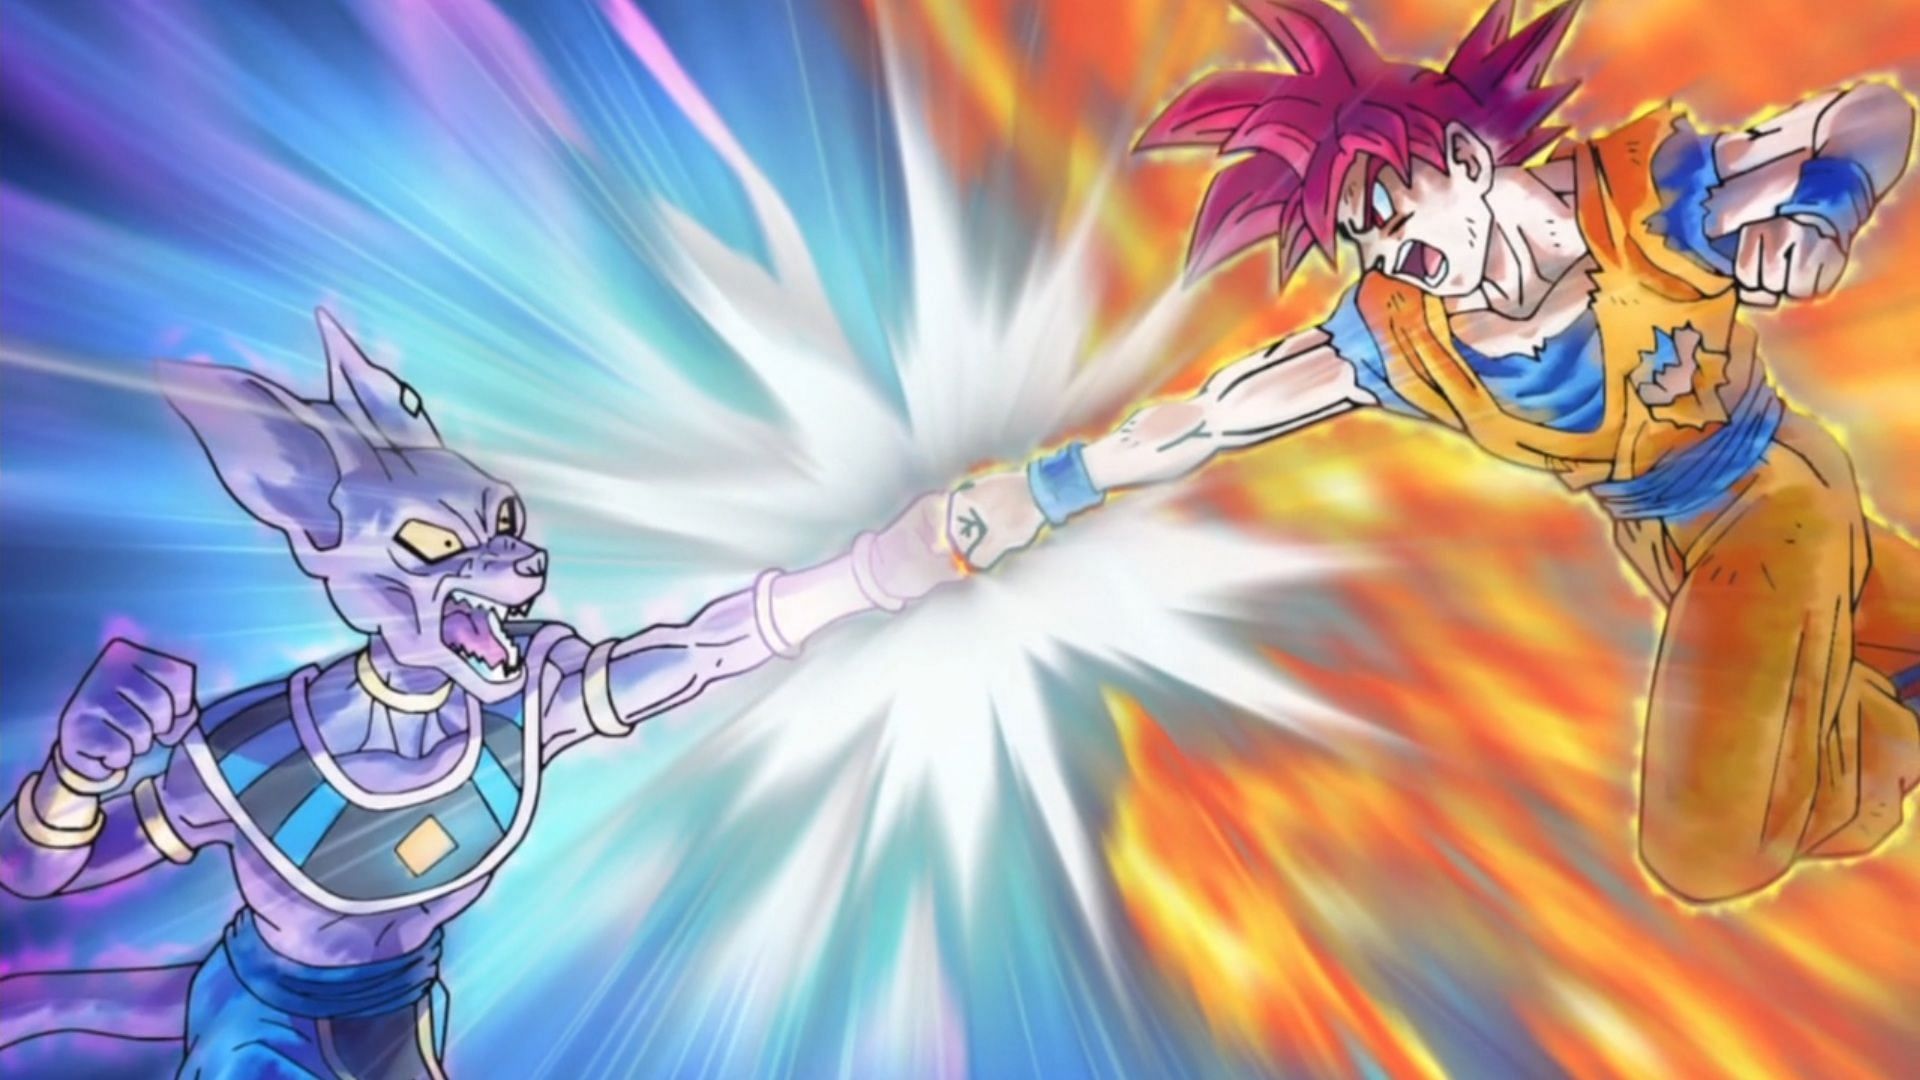 Beerus vs. Goku (Image via Toei Animation)